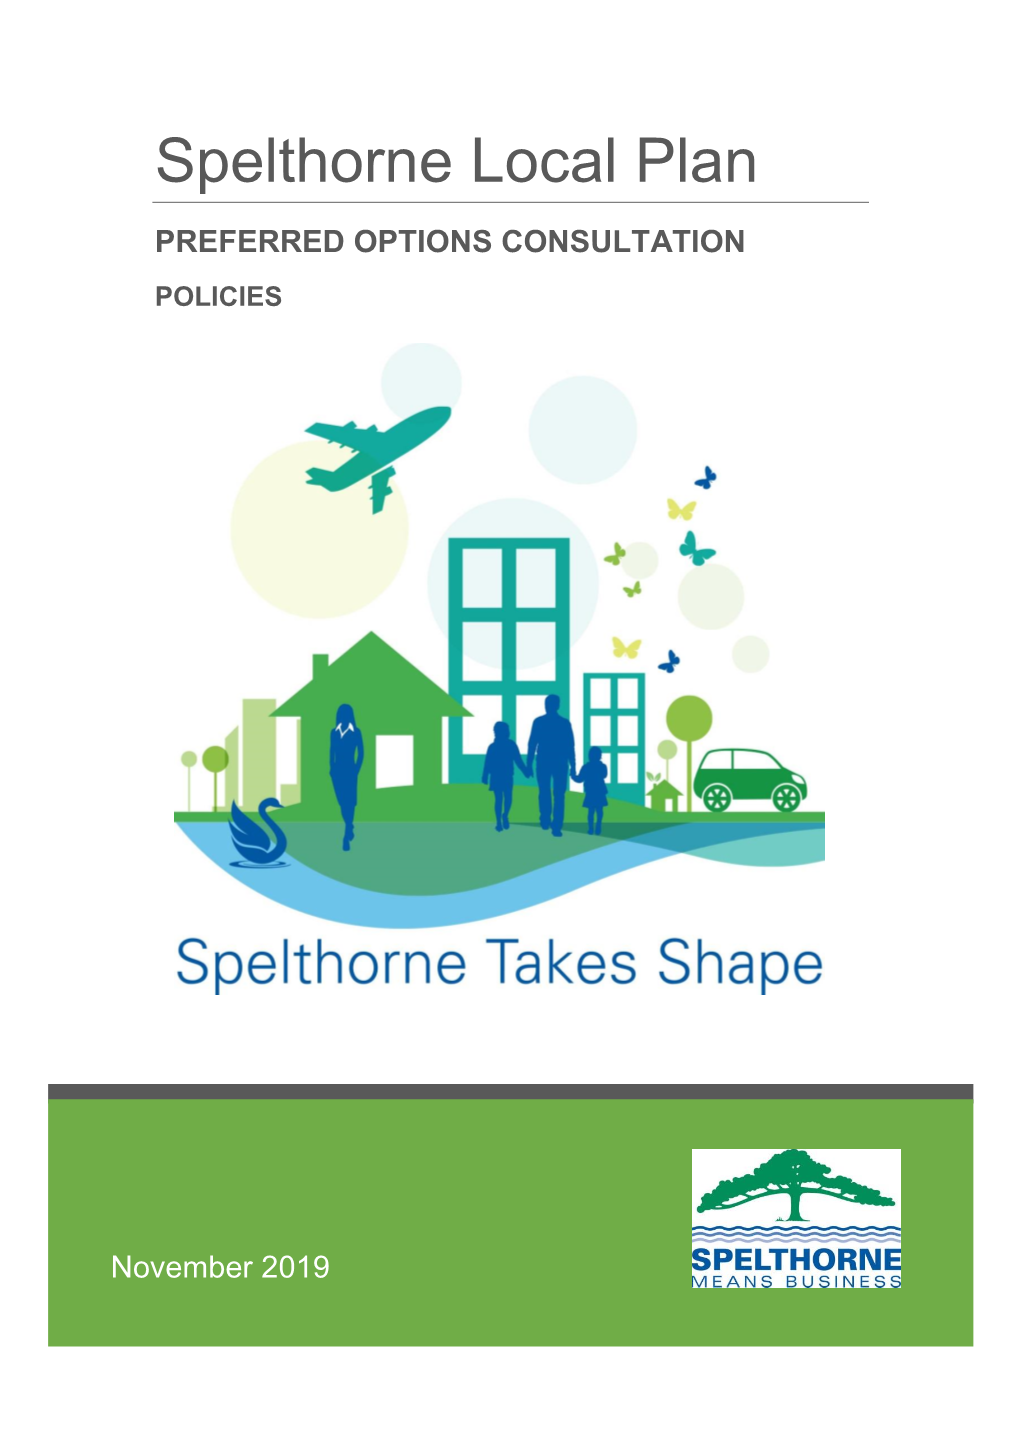 Spelthorne Local Plan Preferred Options Consultation